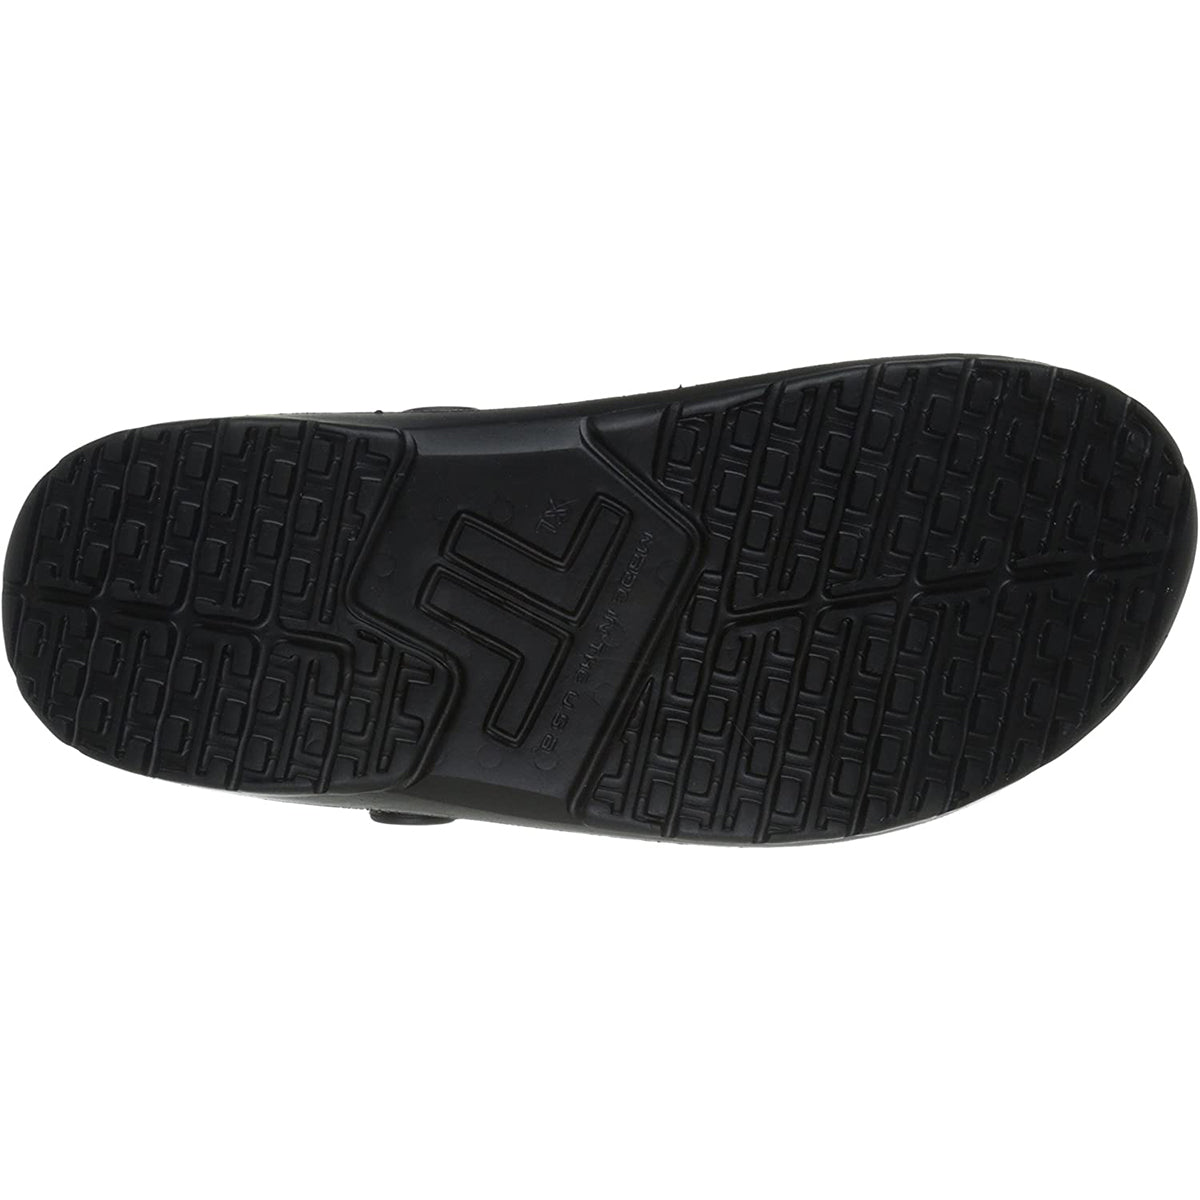 Telic Dream Clog Arch Support Comfort Sandals - Midnight Black Telic